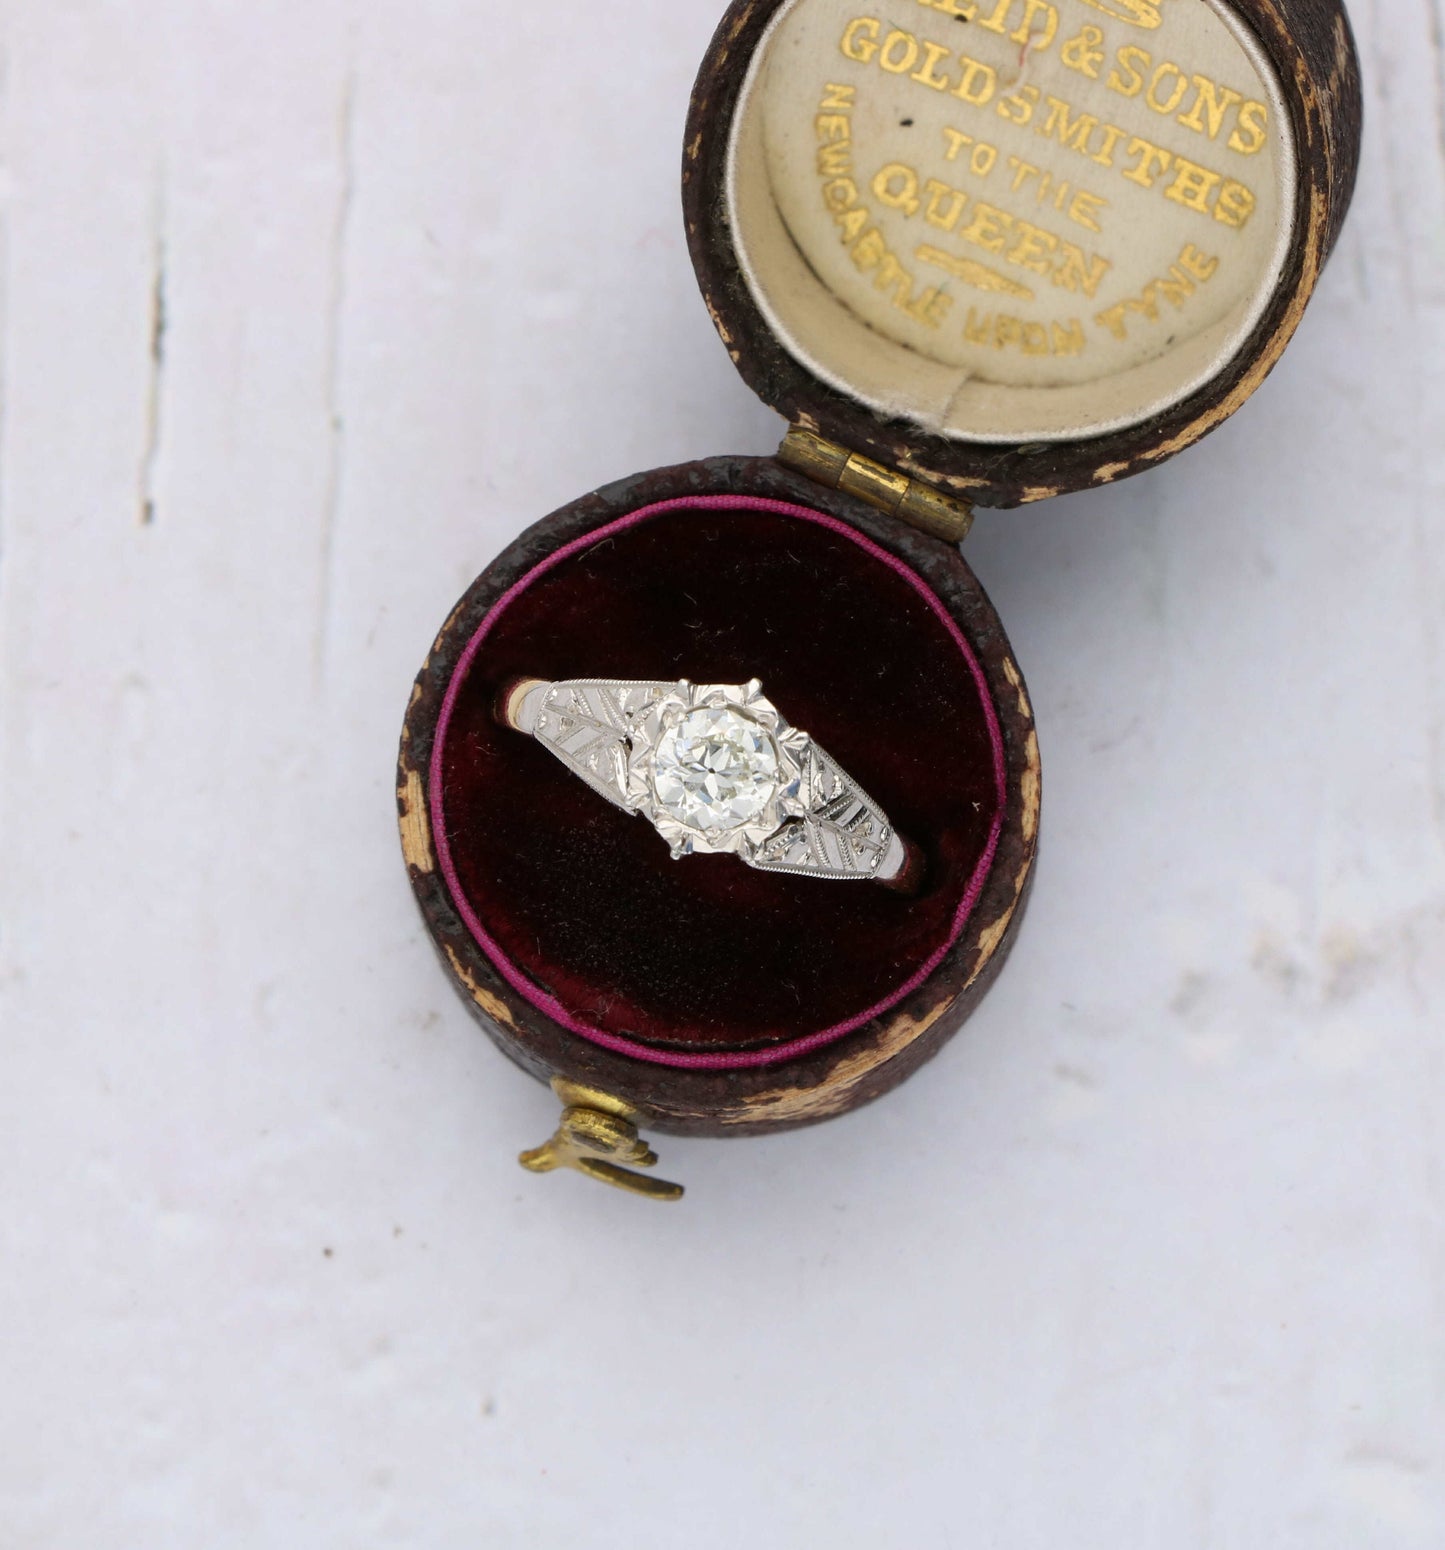 Vintage 18ct and platinum diamond engagement ring